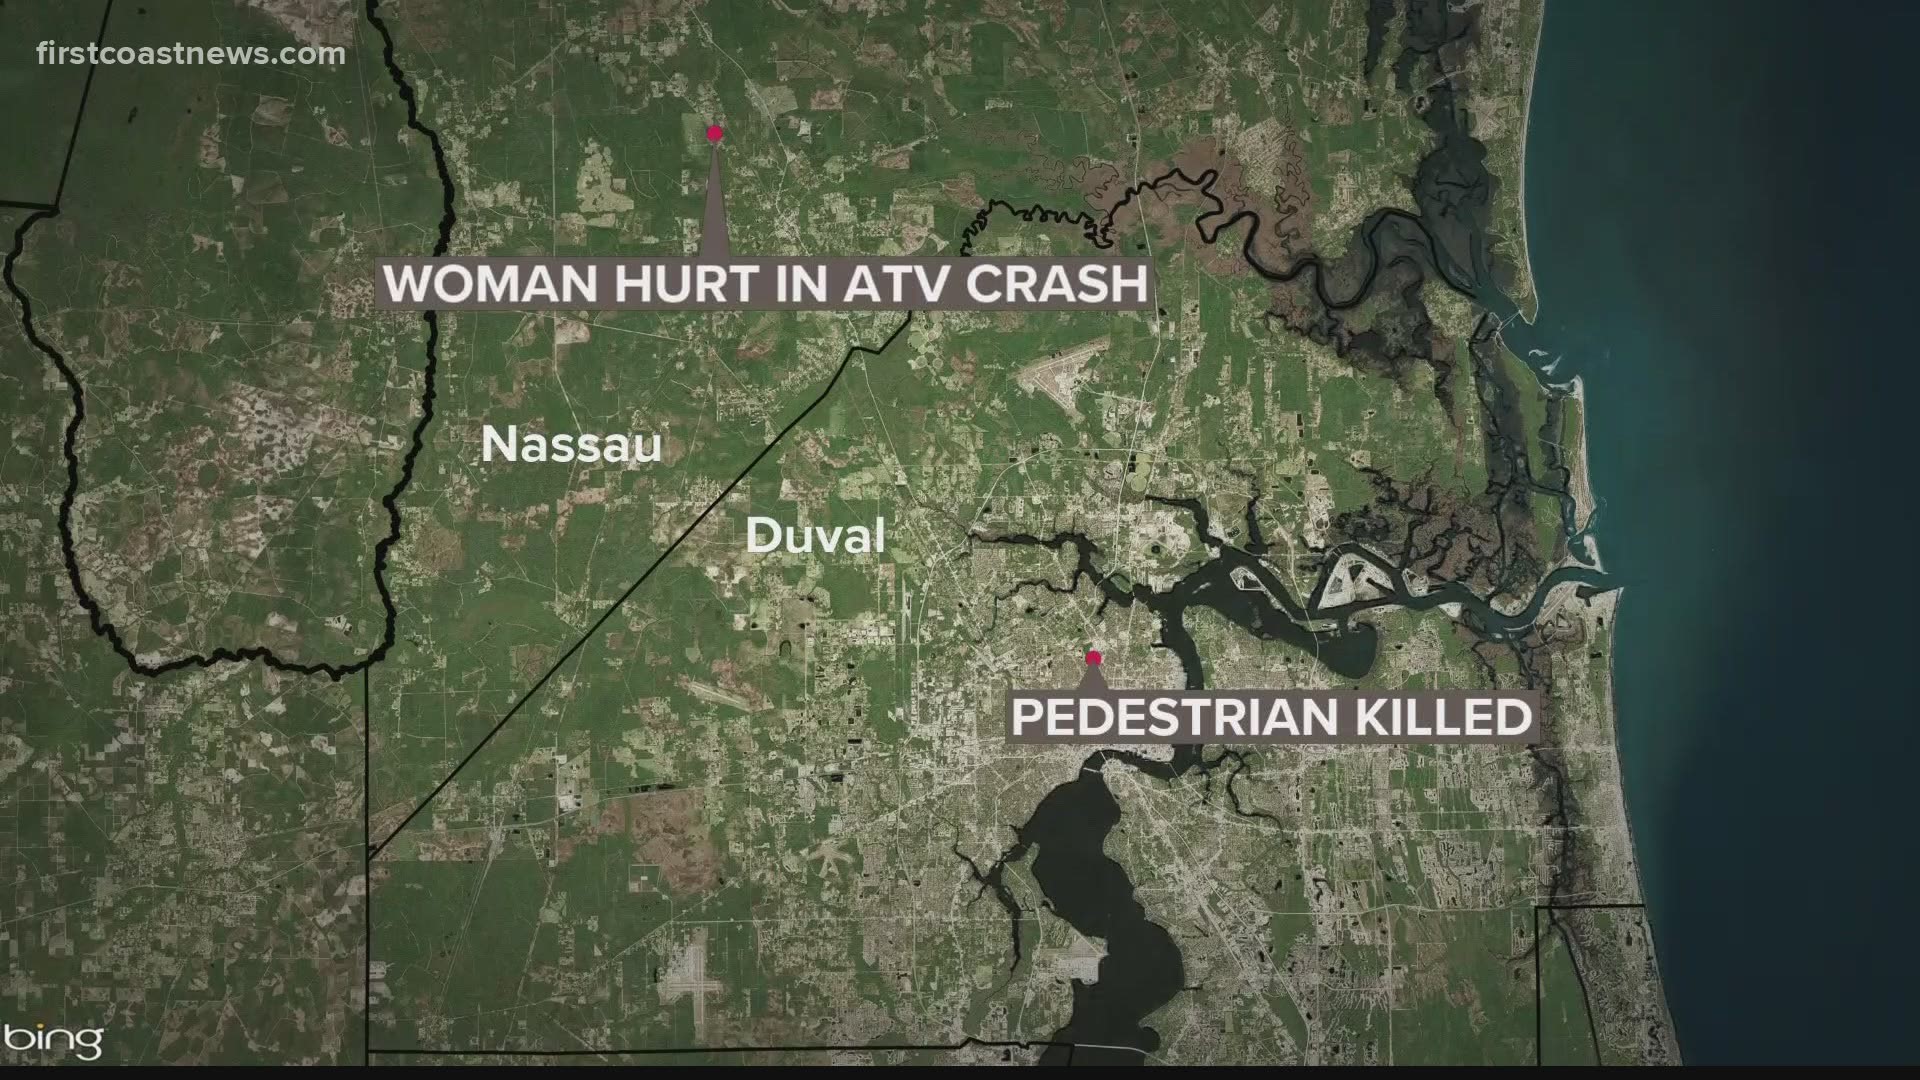 2 injured in Nassau County ATV crash